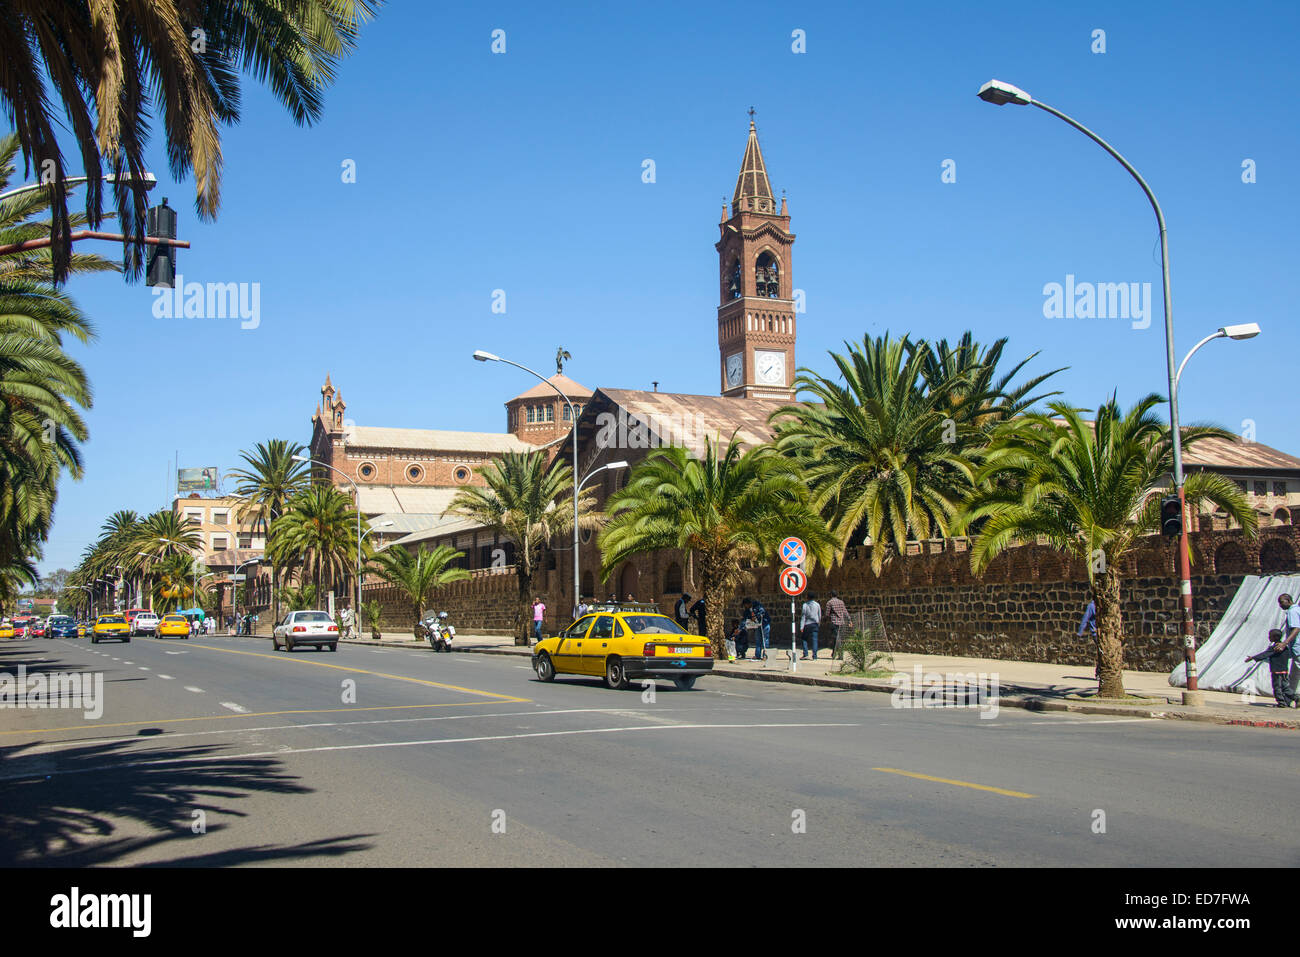 Katholische Kathedrale St. Marien Harnet Avenue, Asmara, Eritrea Stockfoto